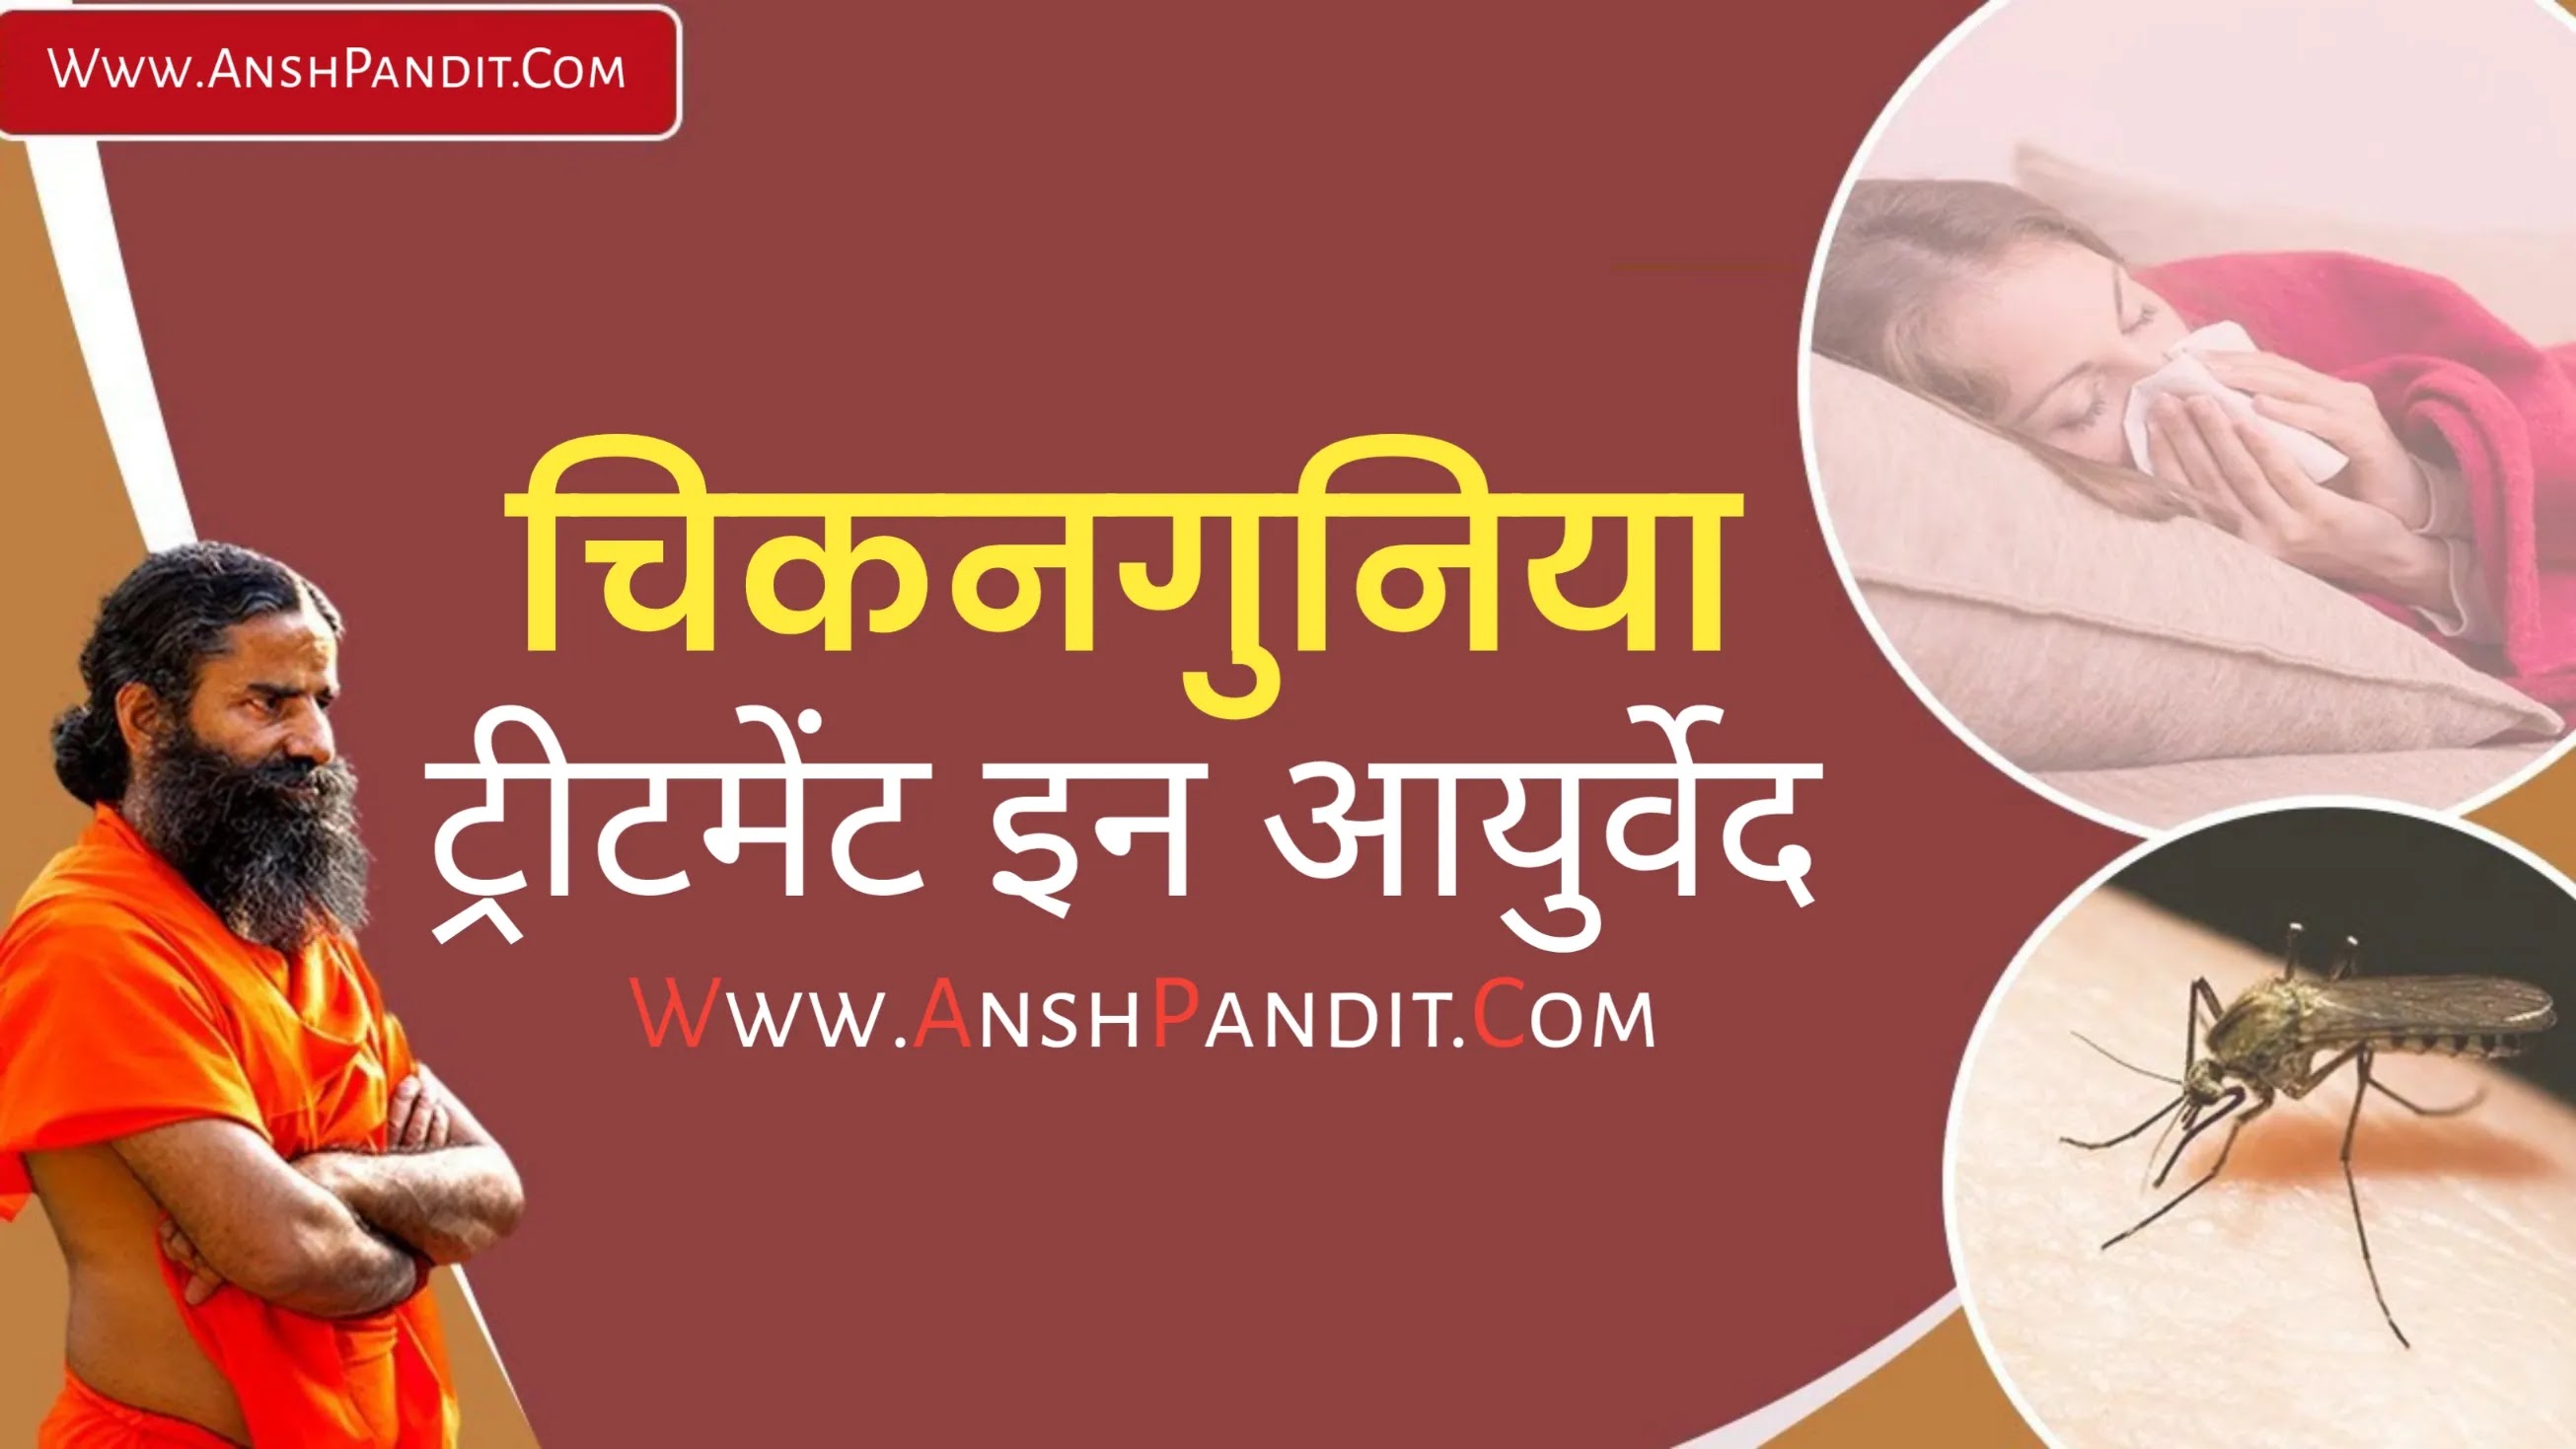 Chikungunya Treatment in Ayurveda in Marathi